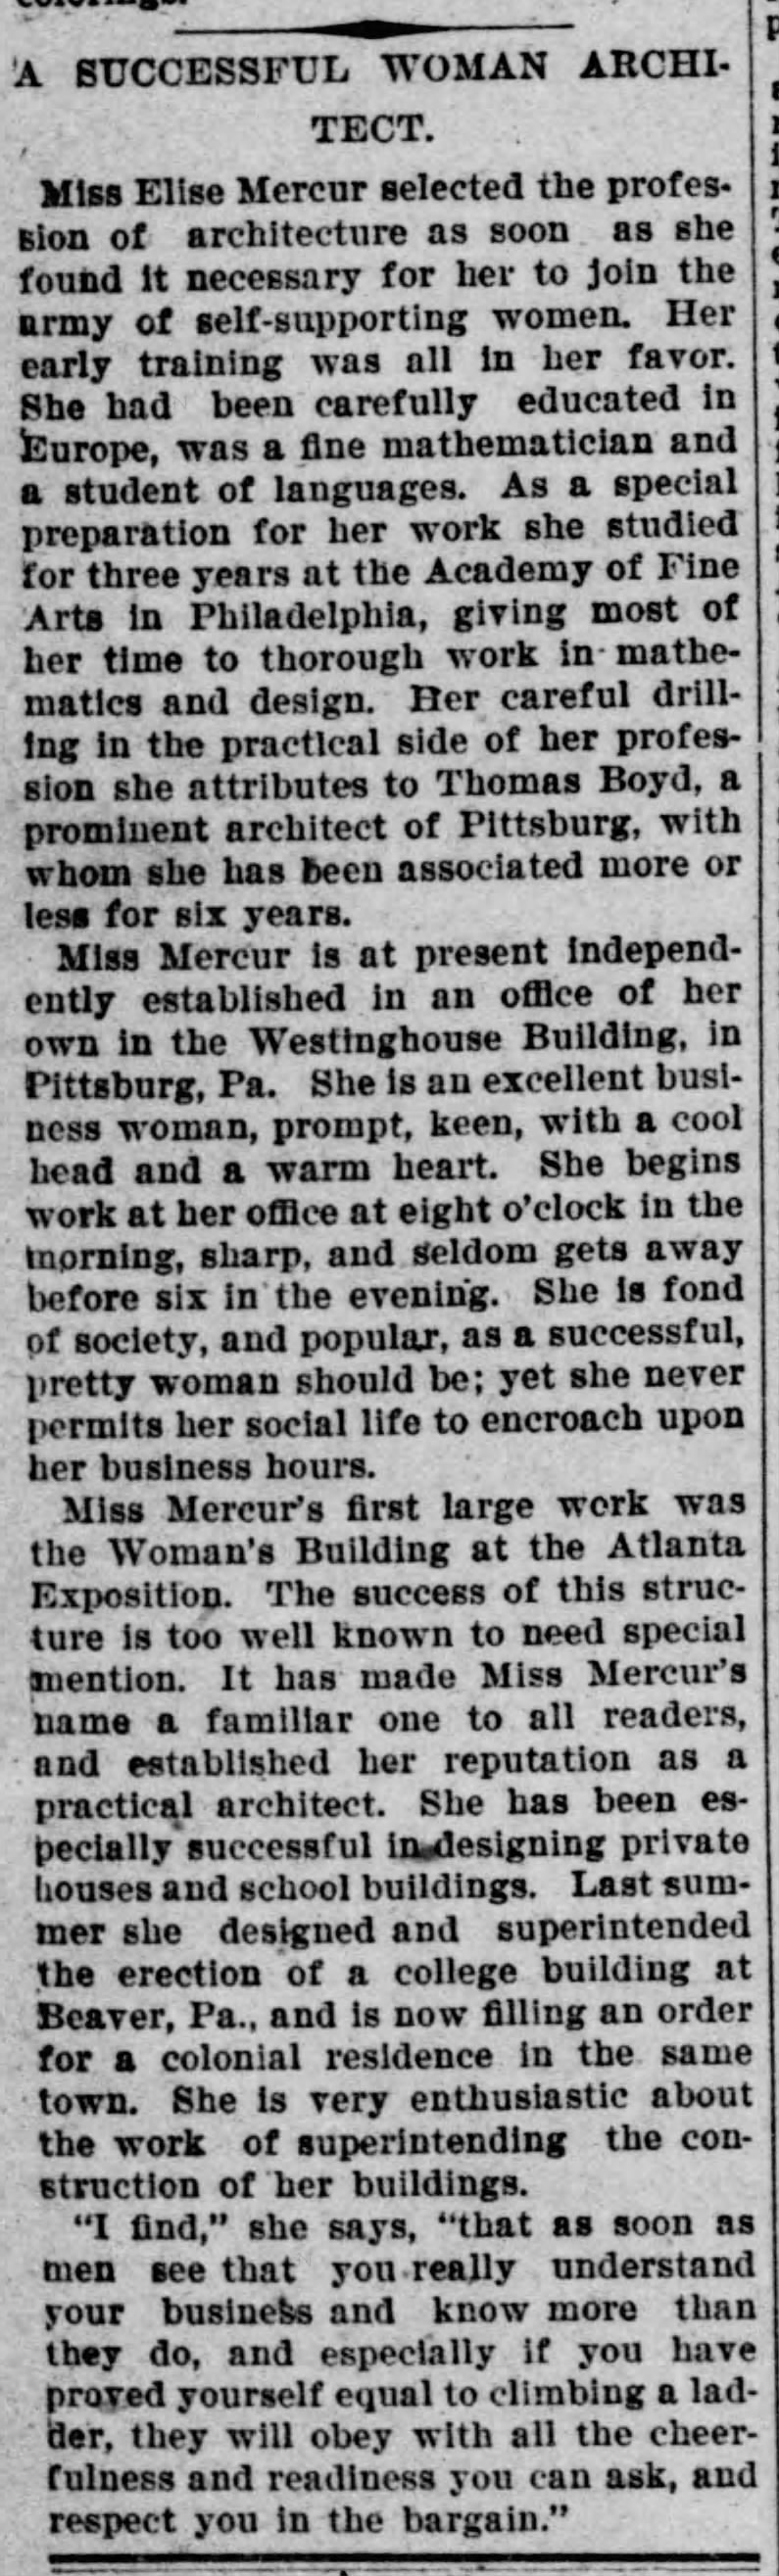 A Successful Woman Architect, The Banner-Democrat, (Lake-Providence, Louisiana) 3 October 1896, p 4